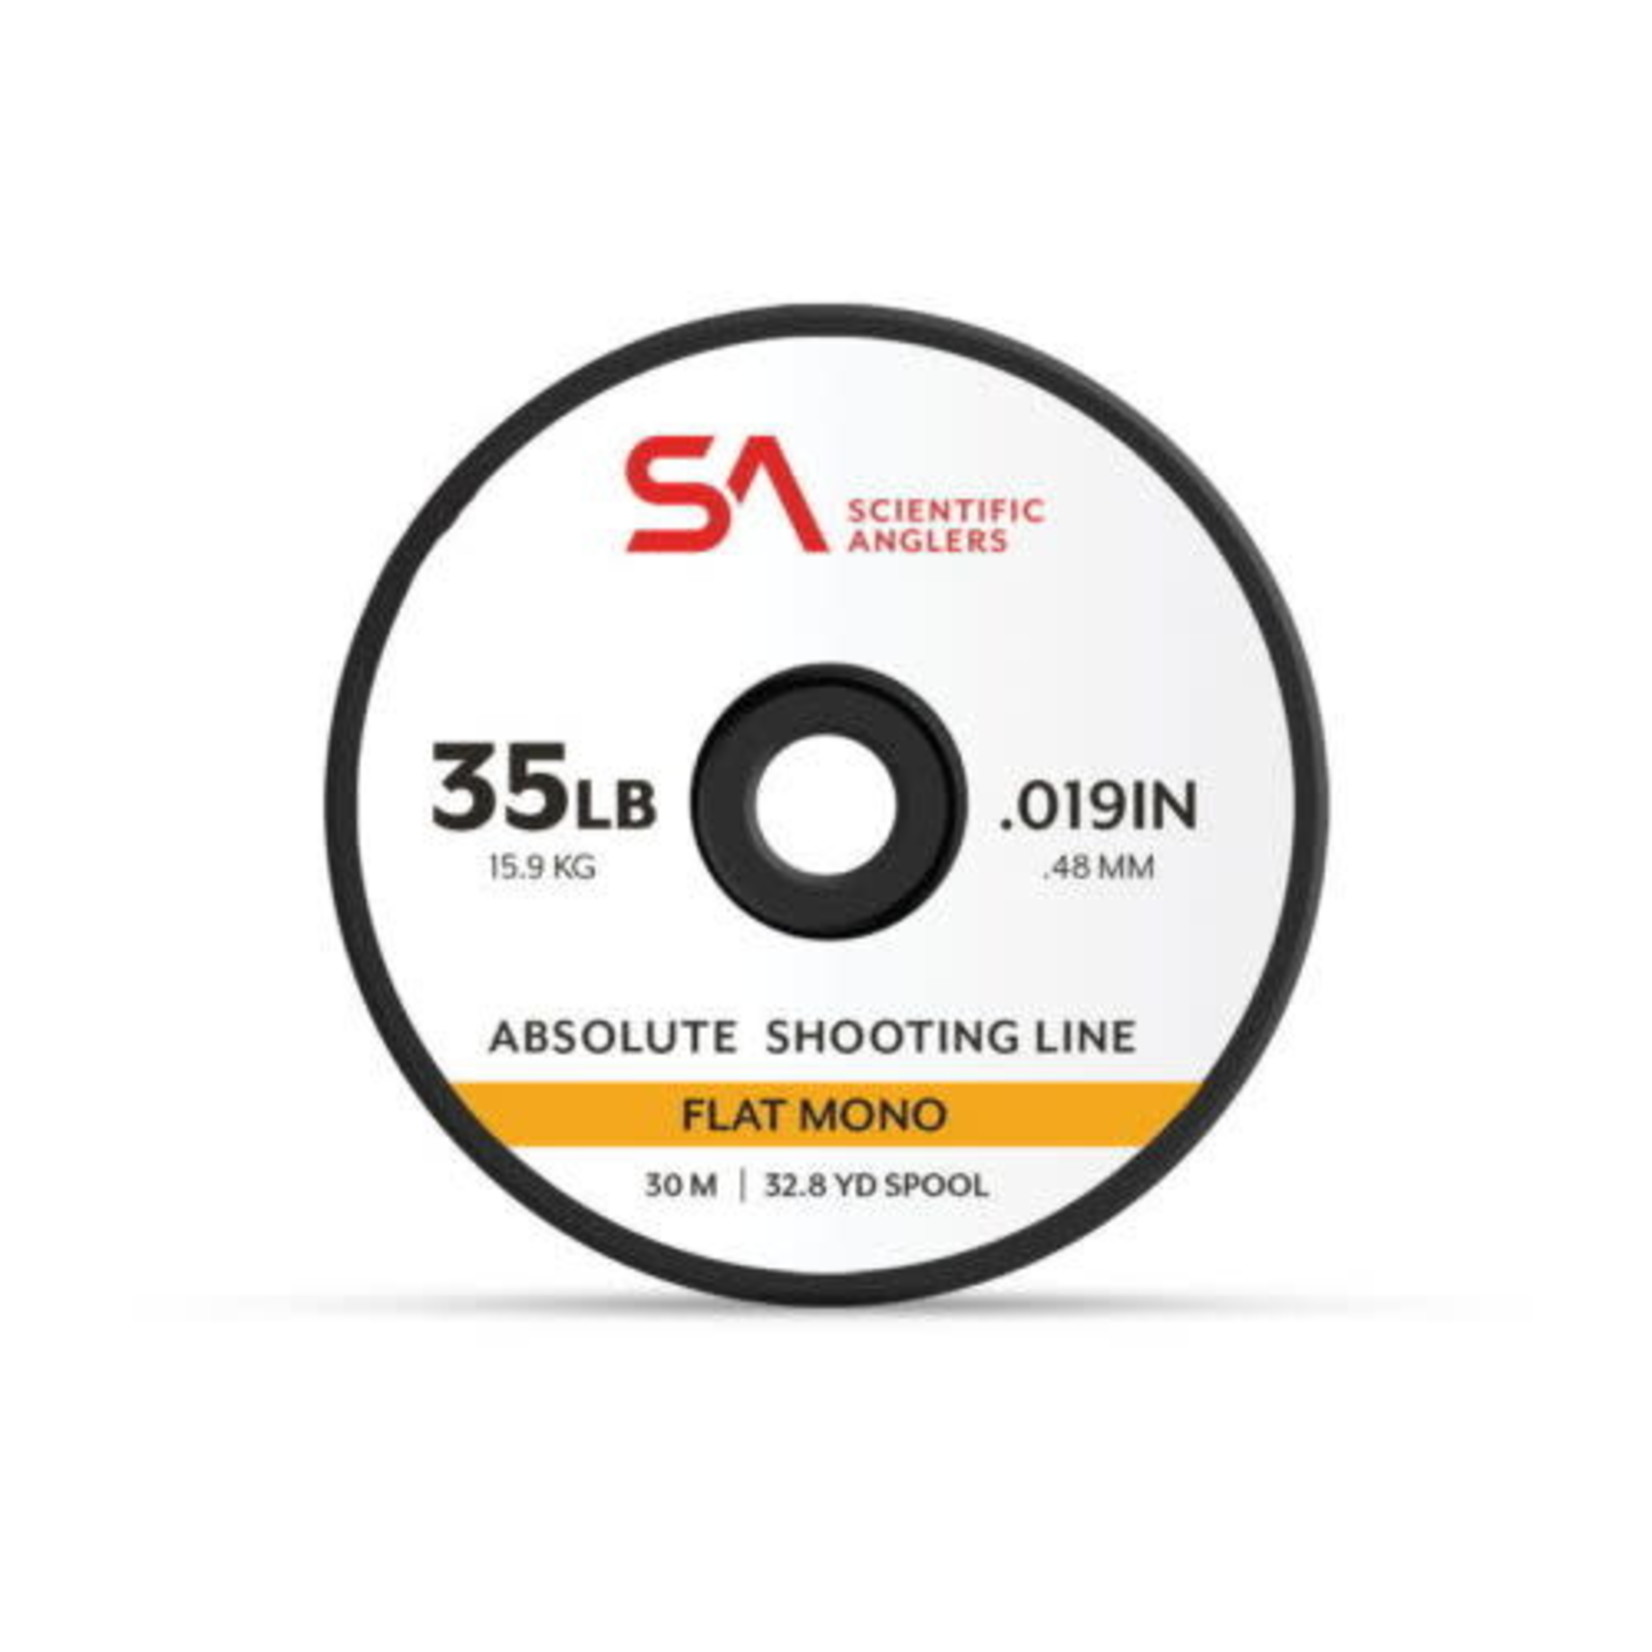 SCIENTIFIC ANGLERS SA 42 lb Absolute Shooting line Flat Mono 30 M 32.8 TD